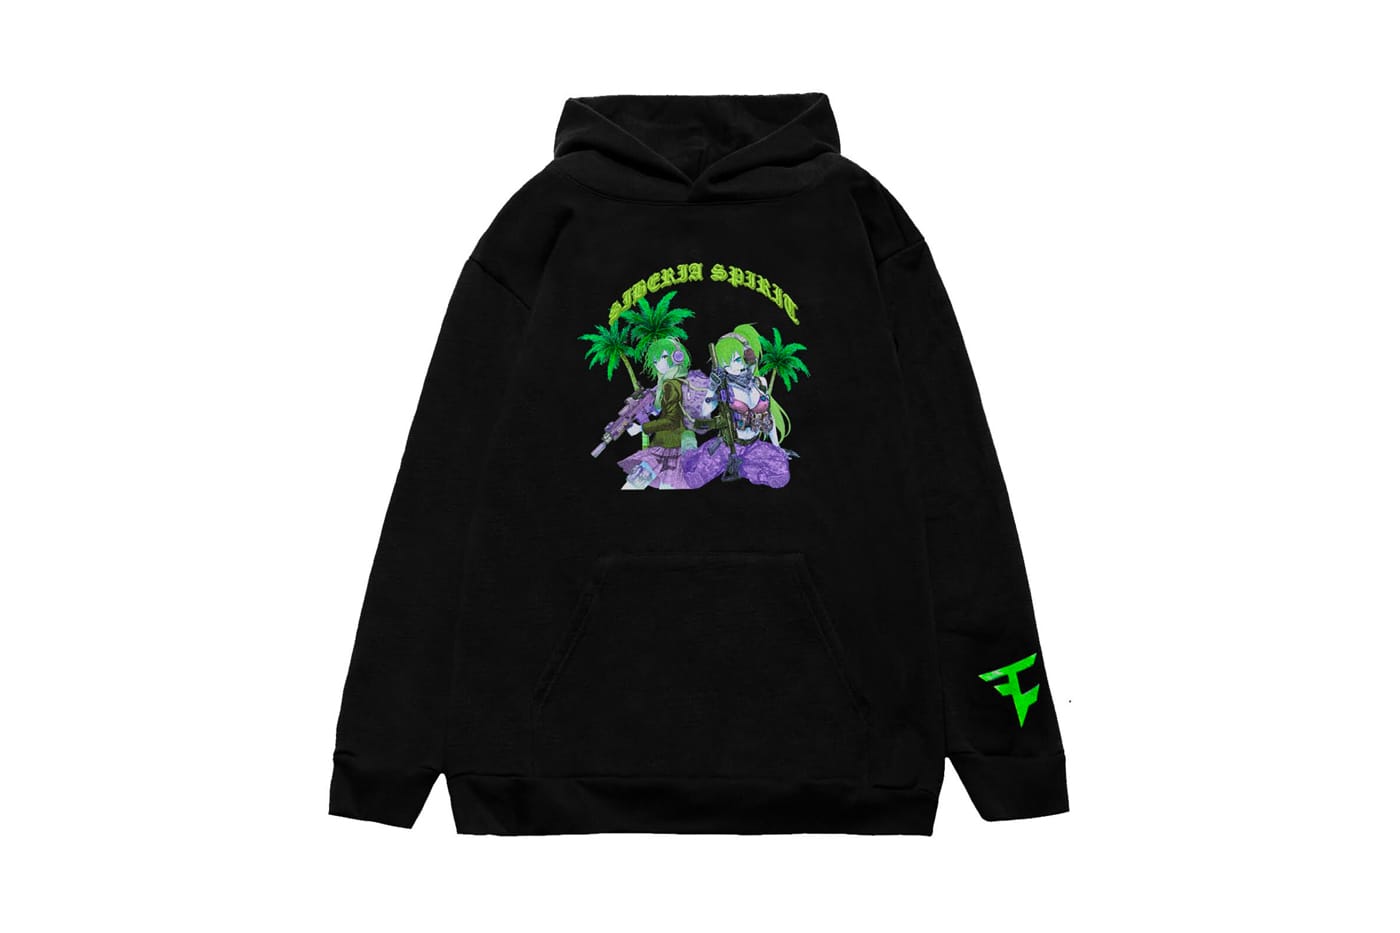 faze clan 2019 logo hoodie black